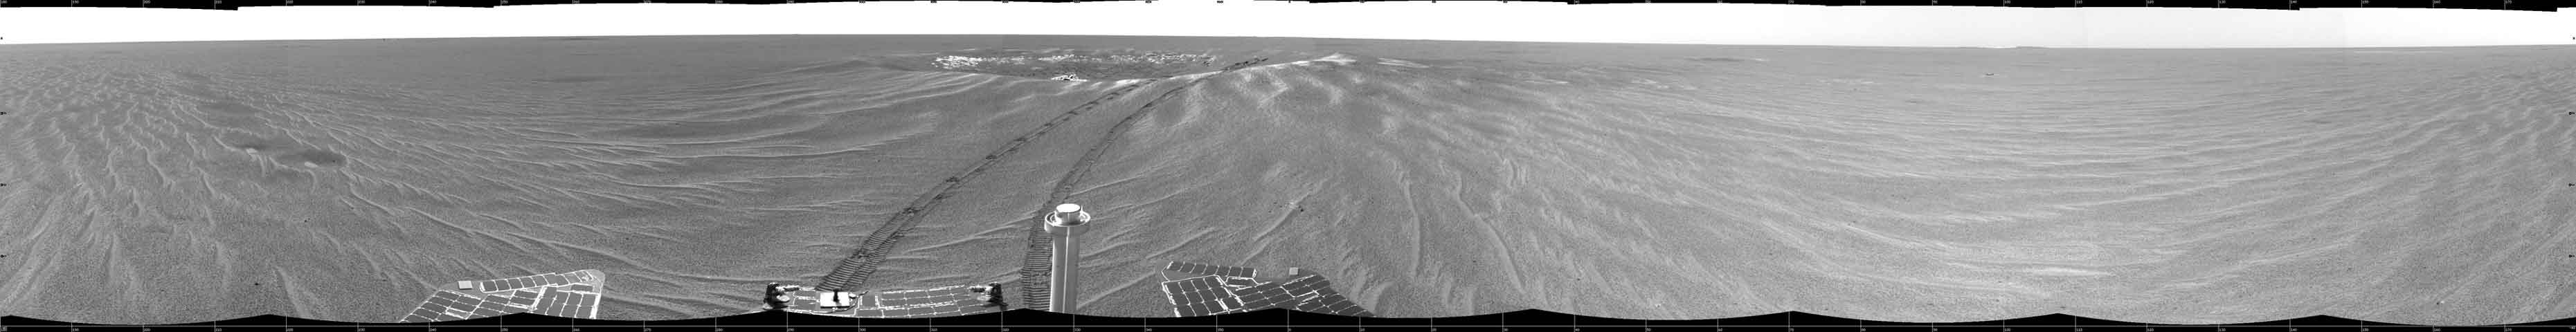 Intrigante Dimples Cerca Eagle Crater en Marte